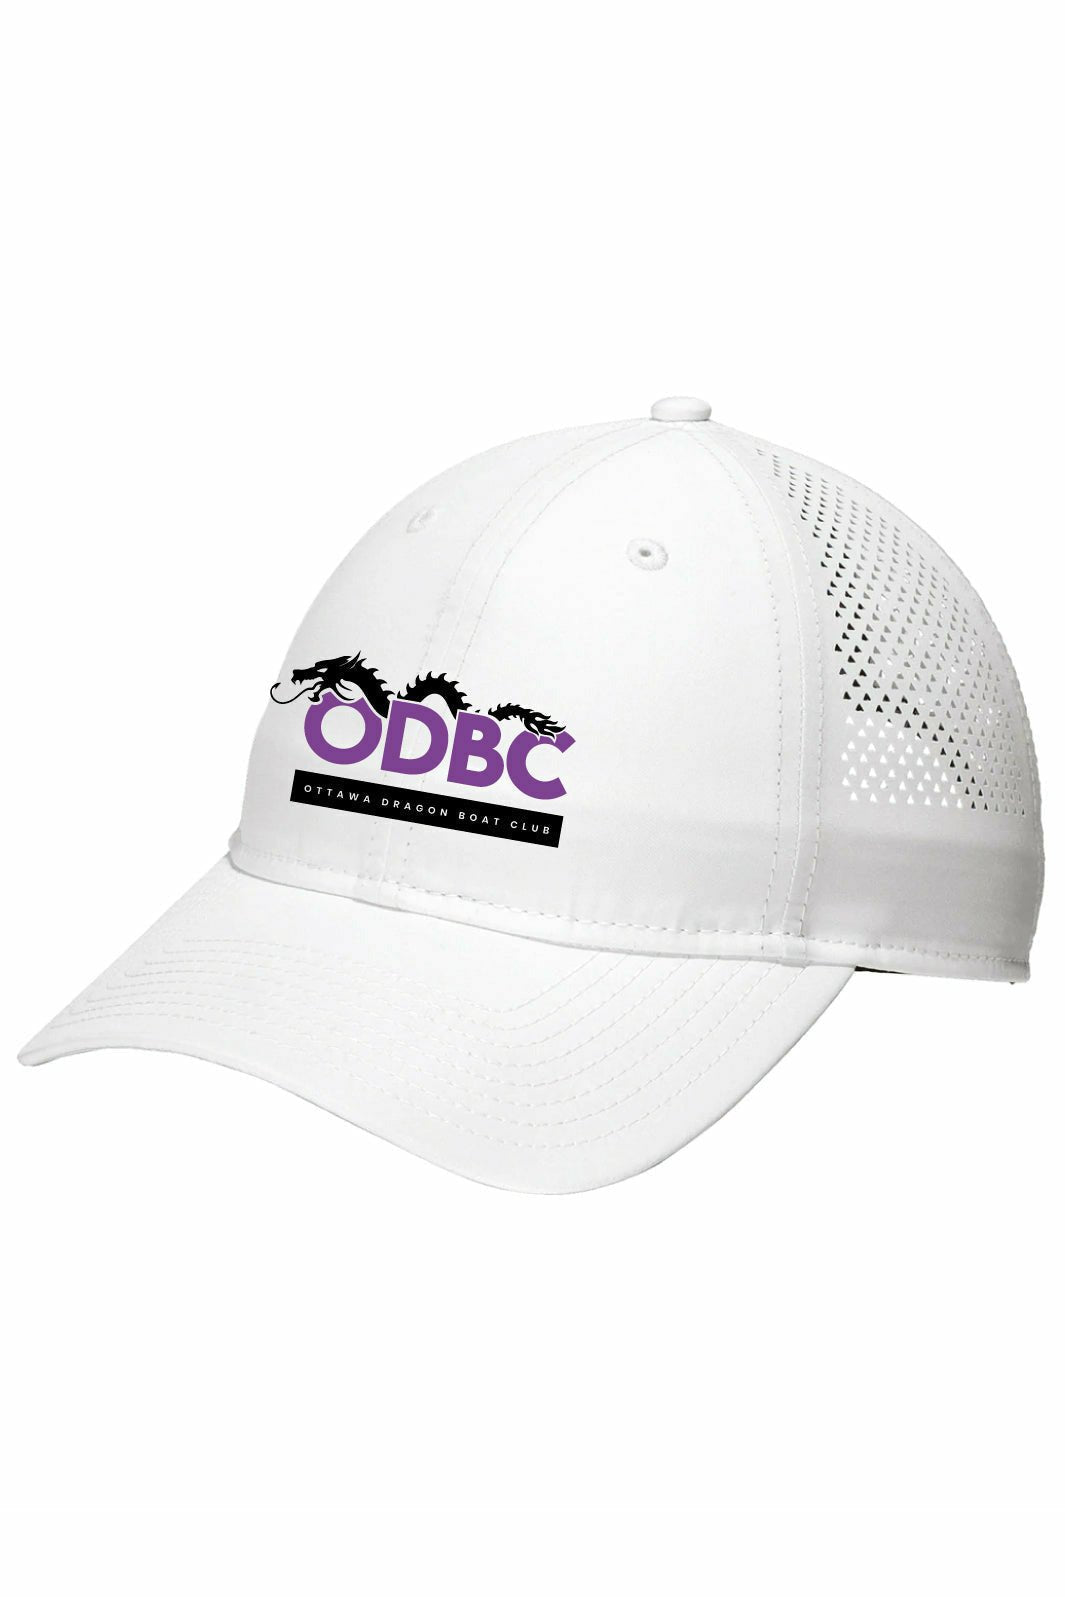 ODBC Perforated Performance Cap - Oddball Workshop